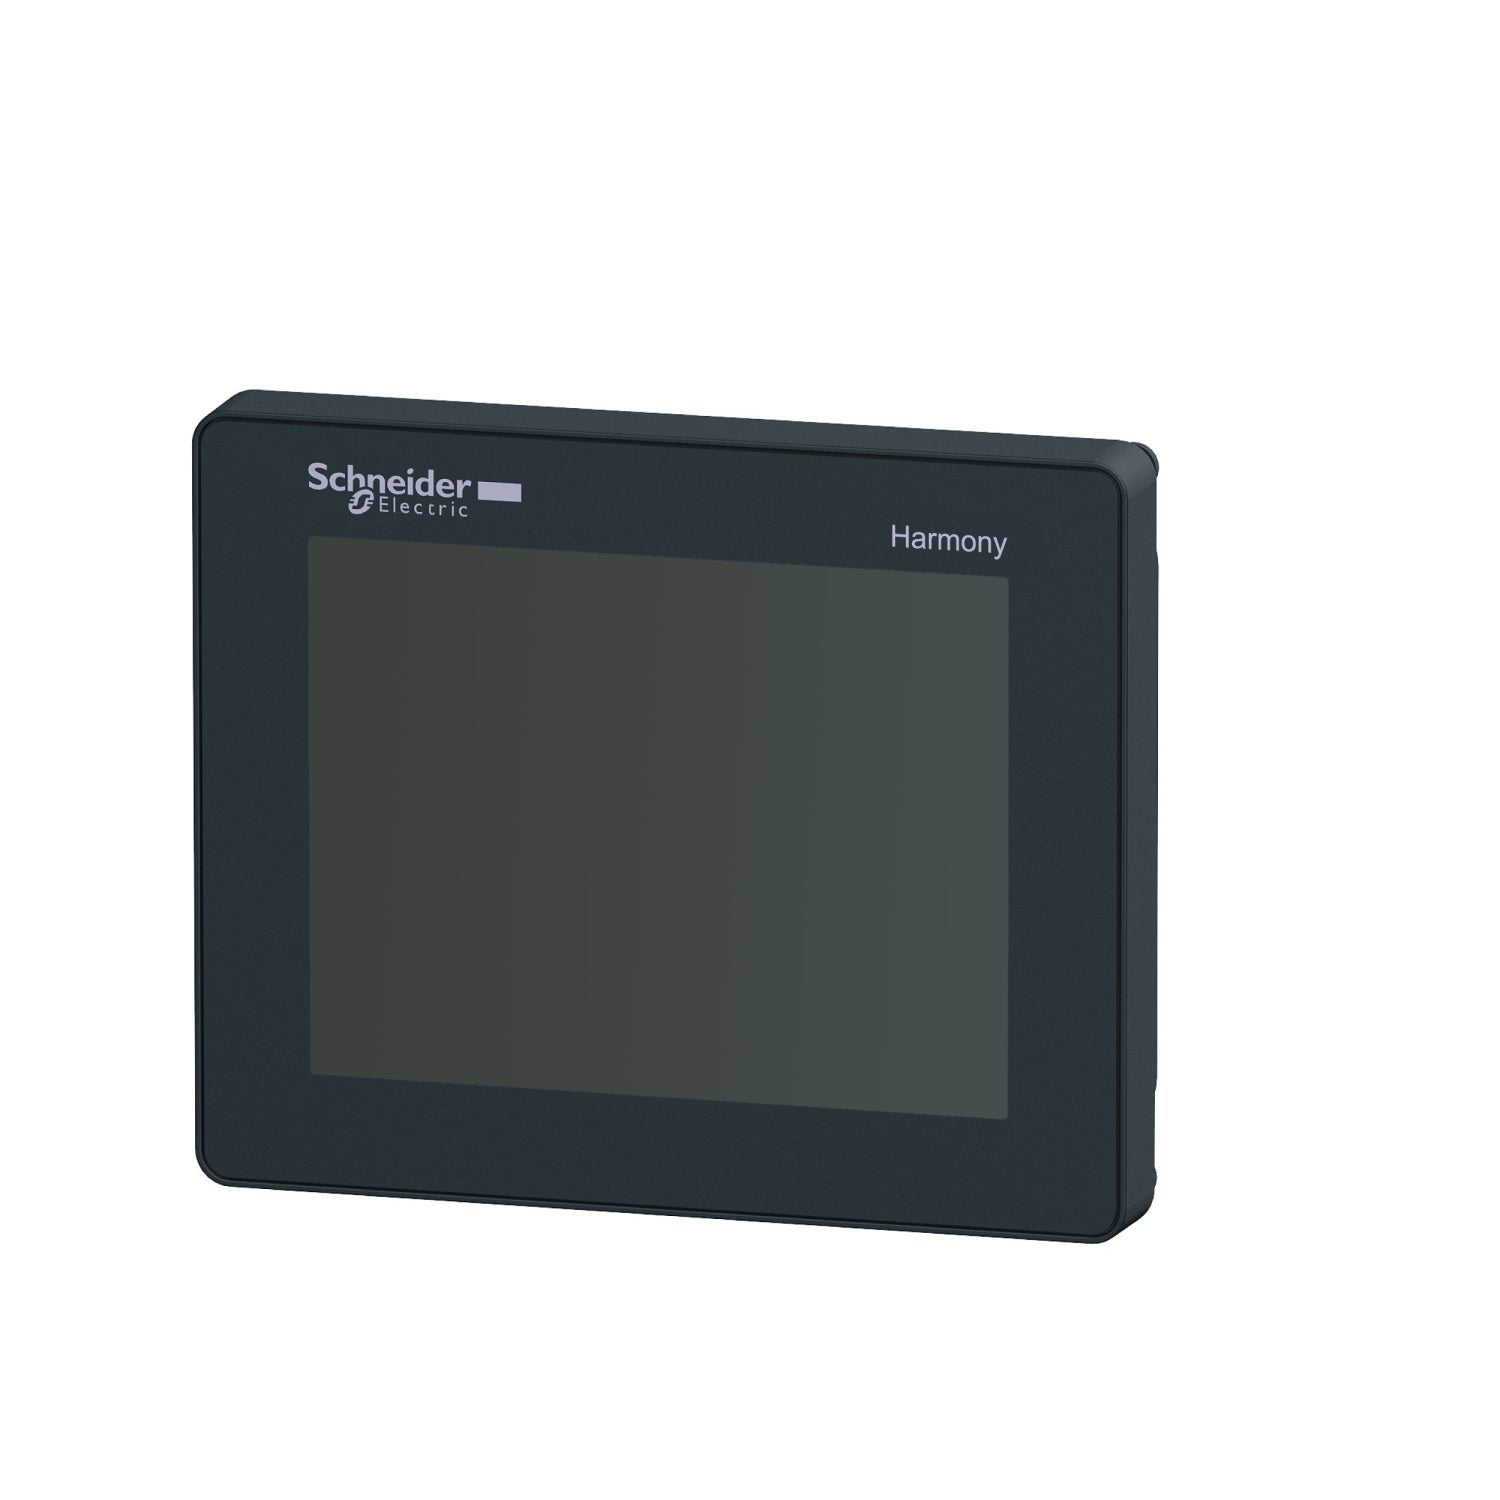 HMISTU655 | Schneider Electric | Colour touch panel screen